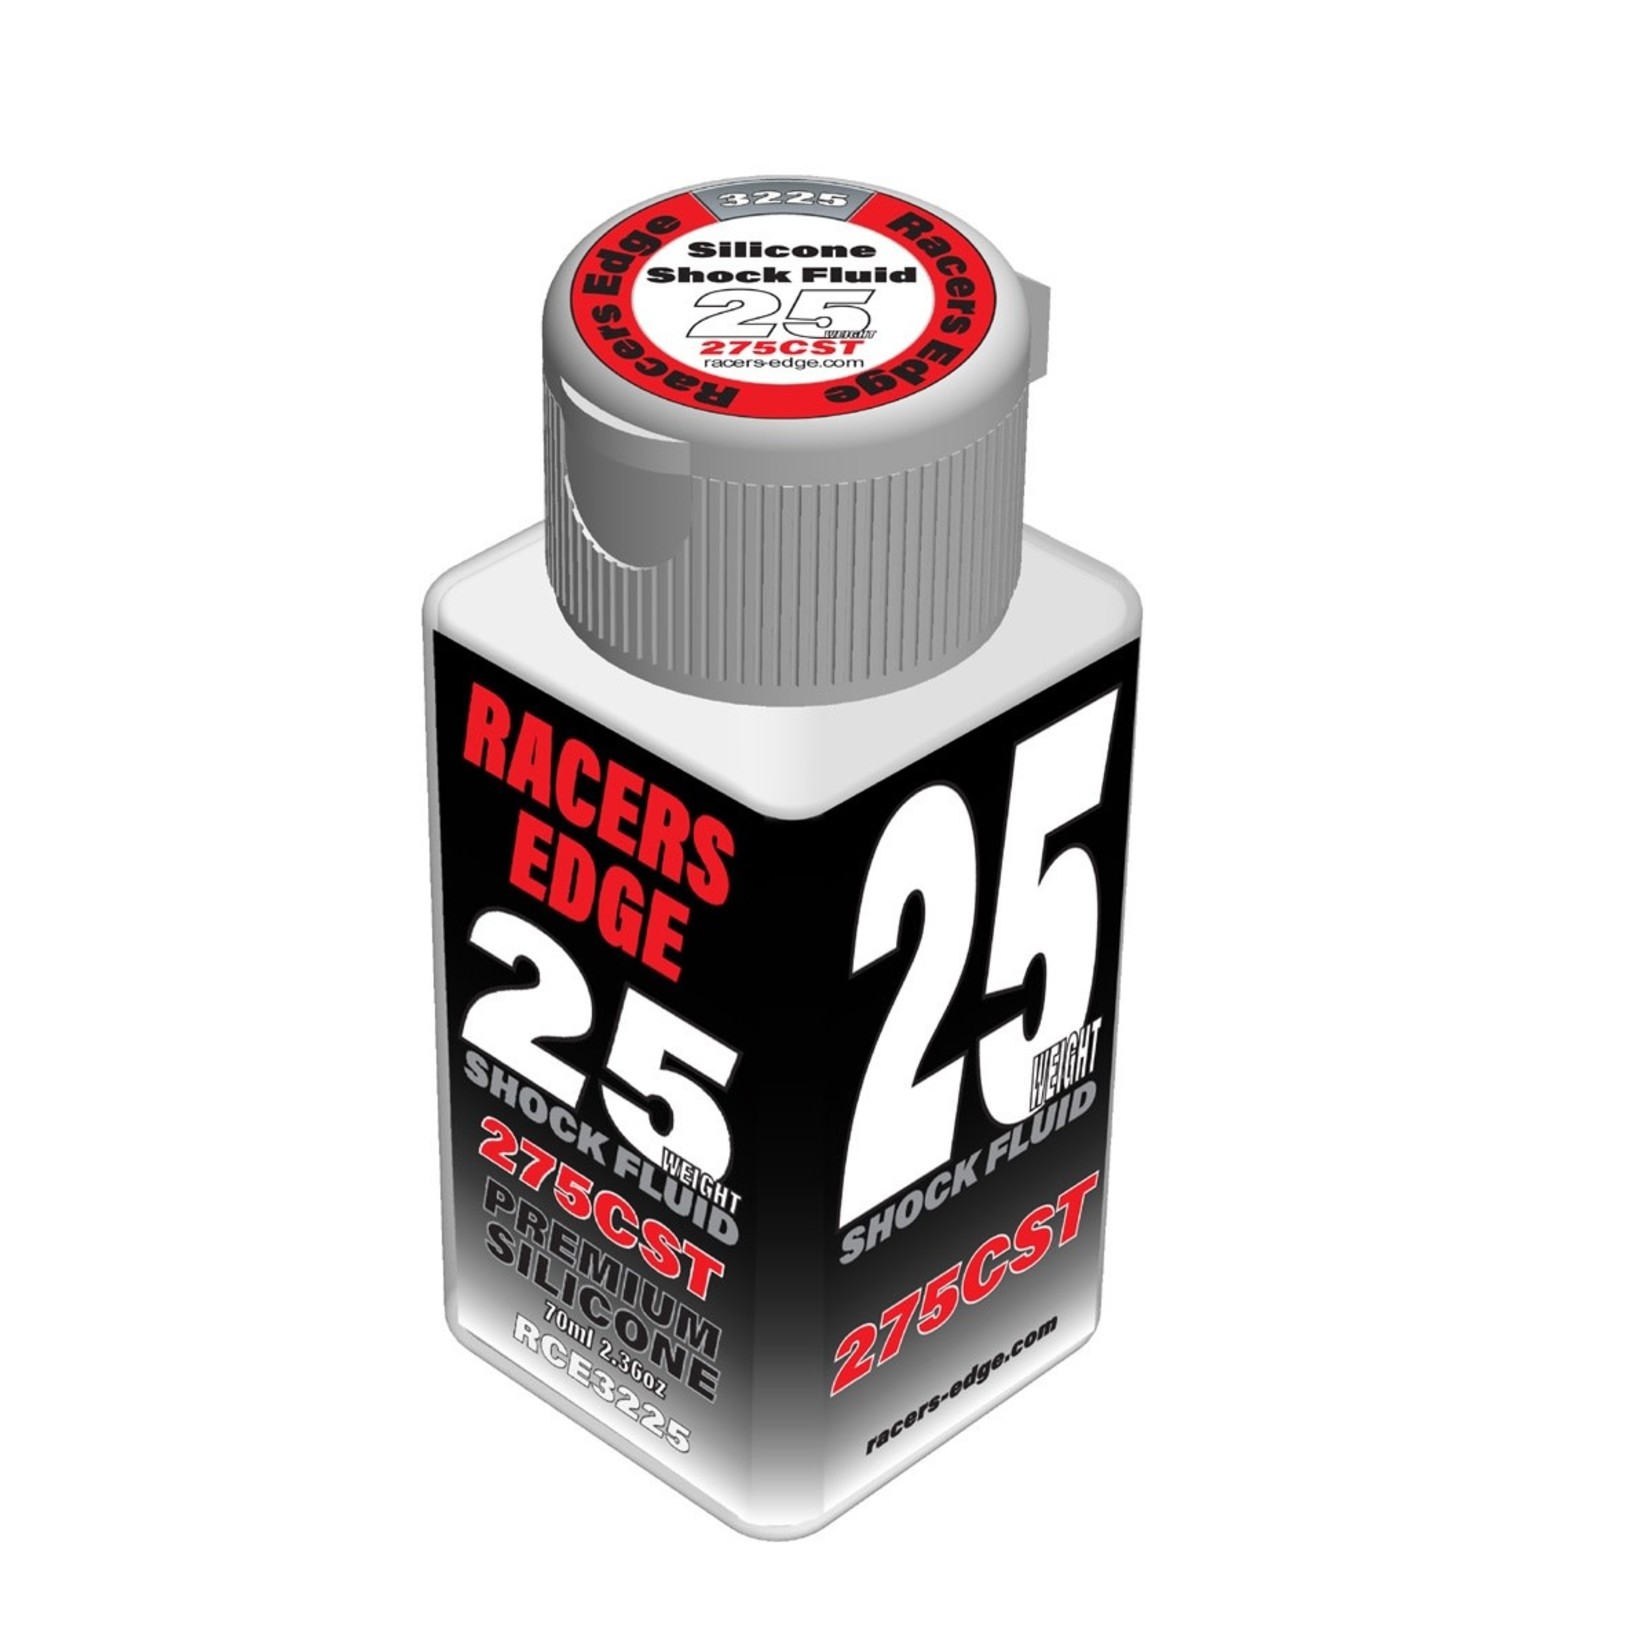 Racers Edge RCE3225 Racers Edge Pure Silicone Shock Oil 25wt 250cSt 70ml 2.36oz